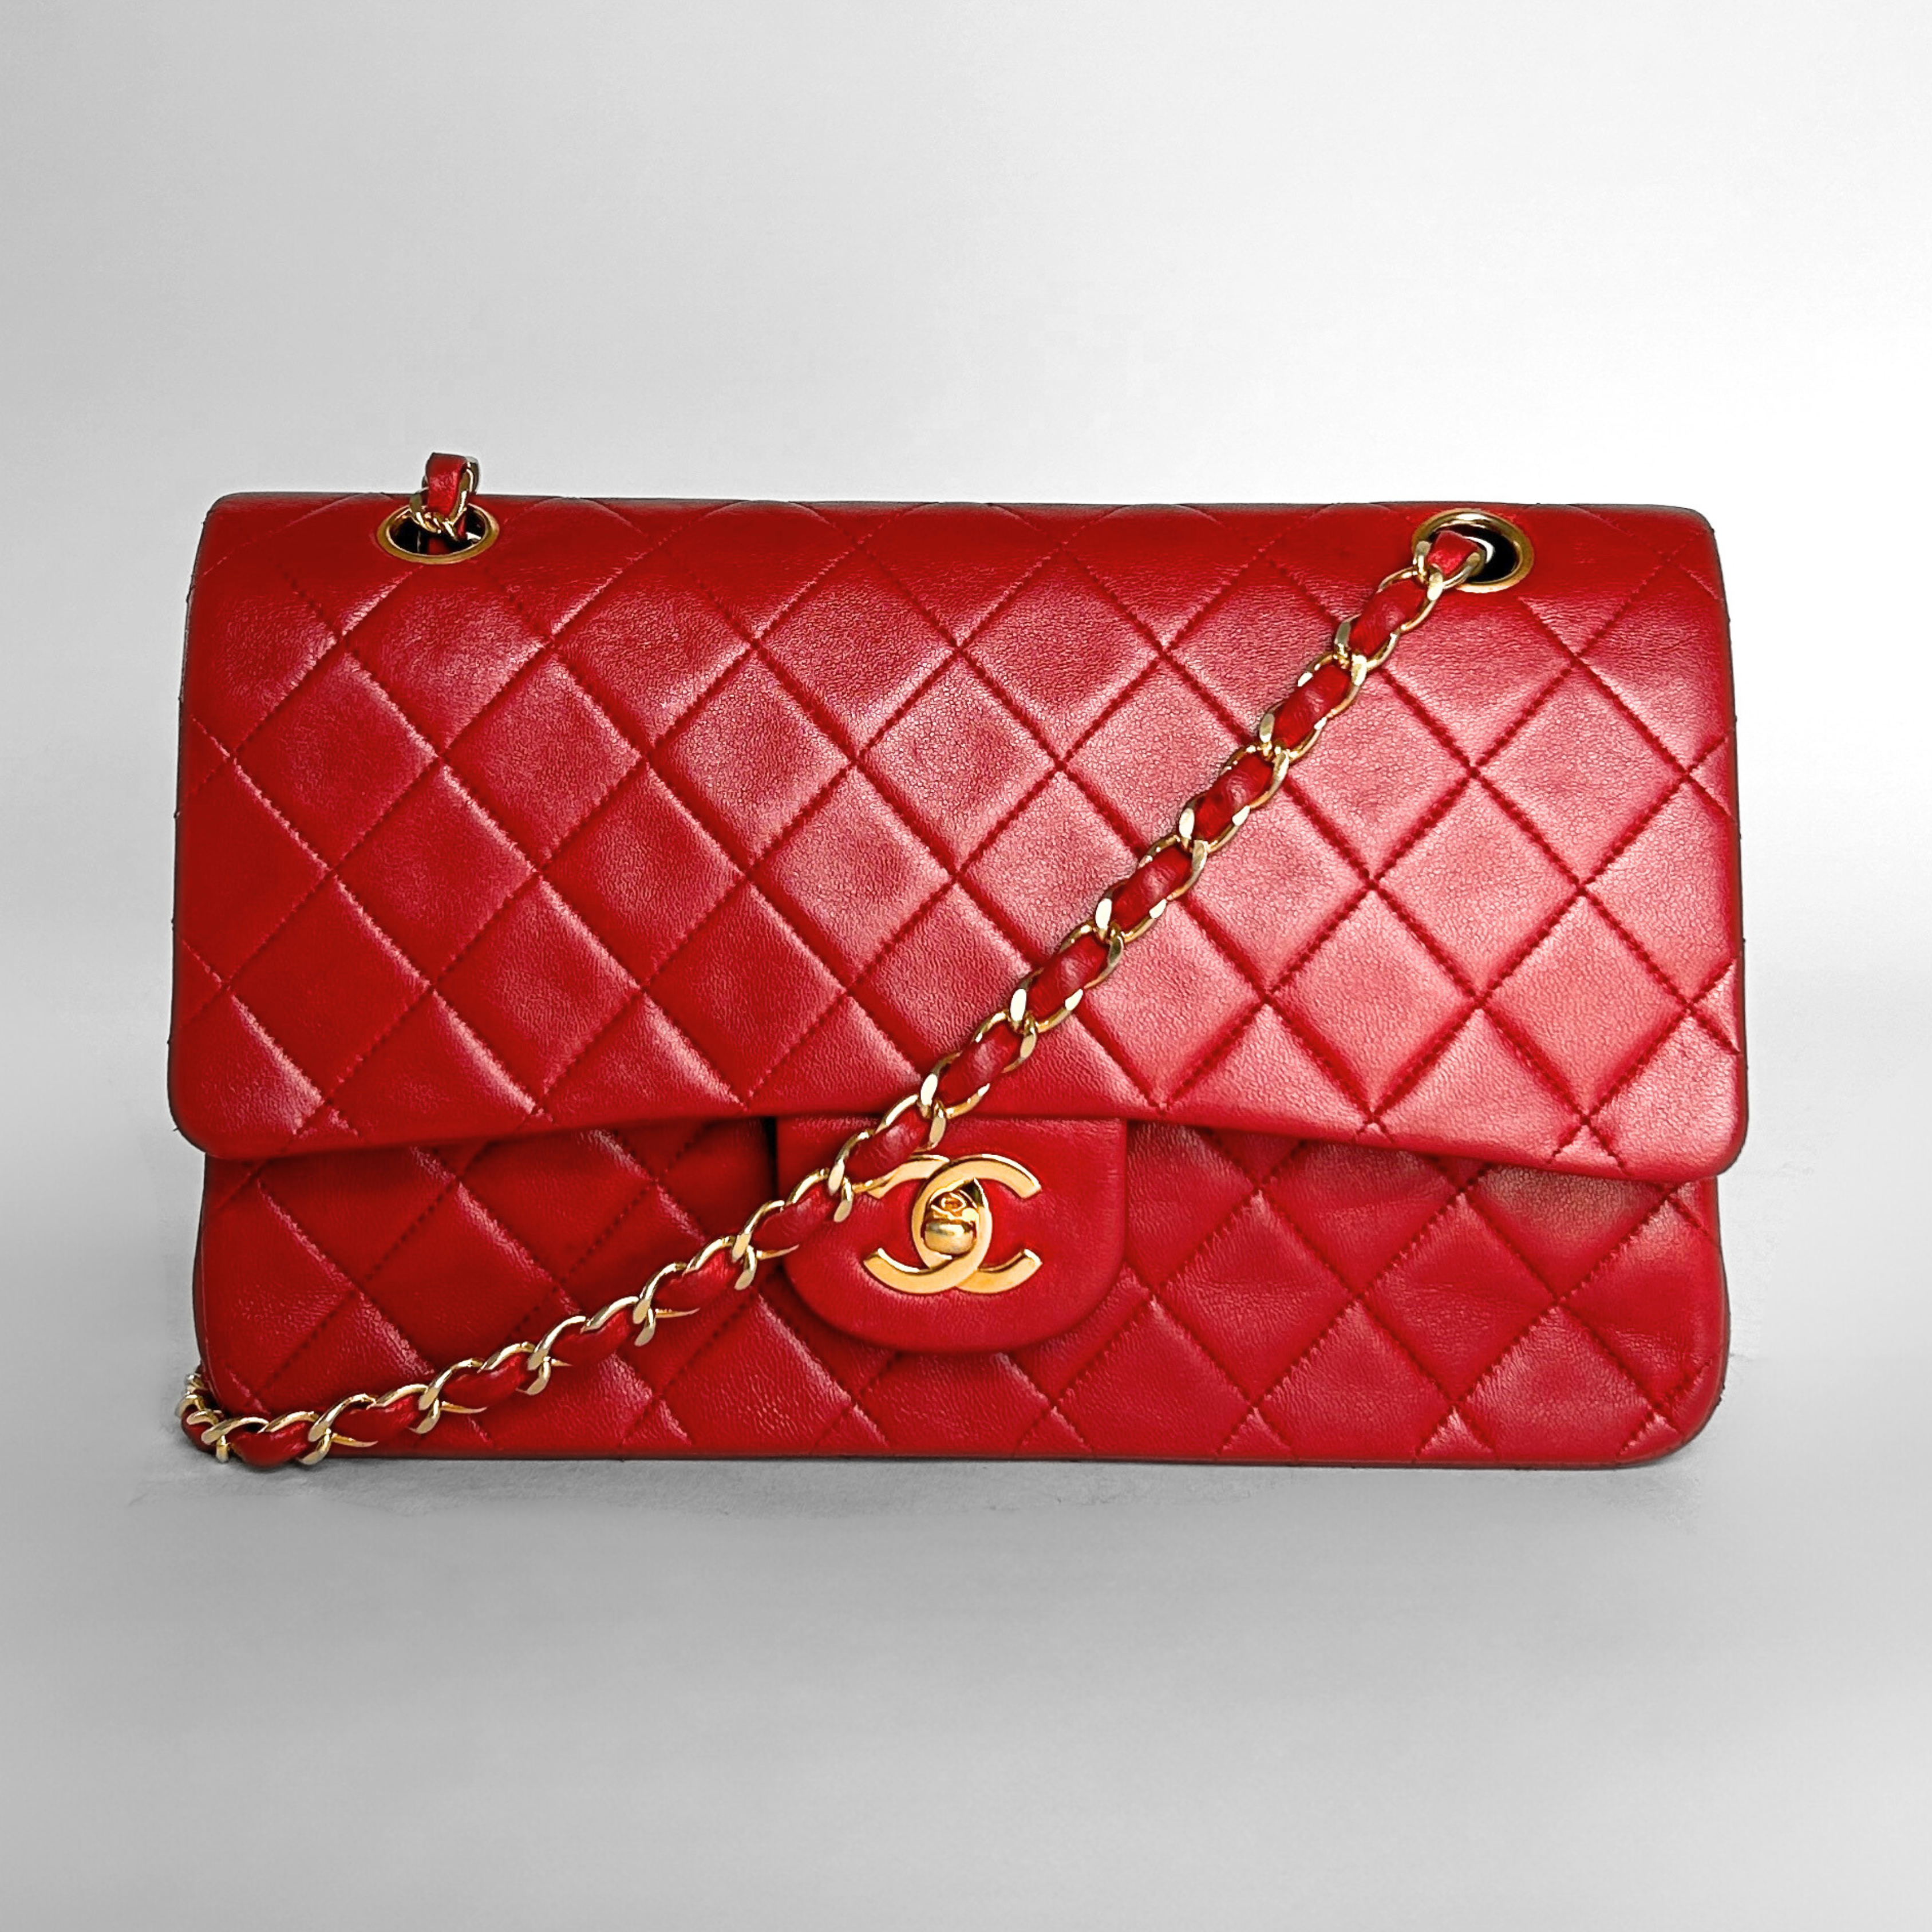 chanel classic handbag red